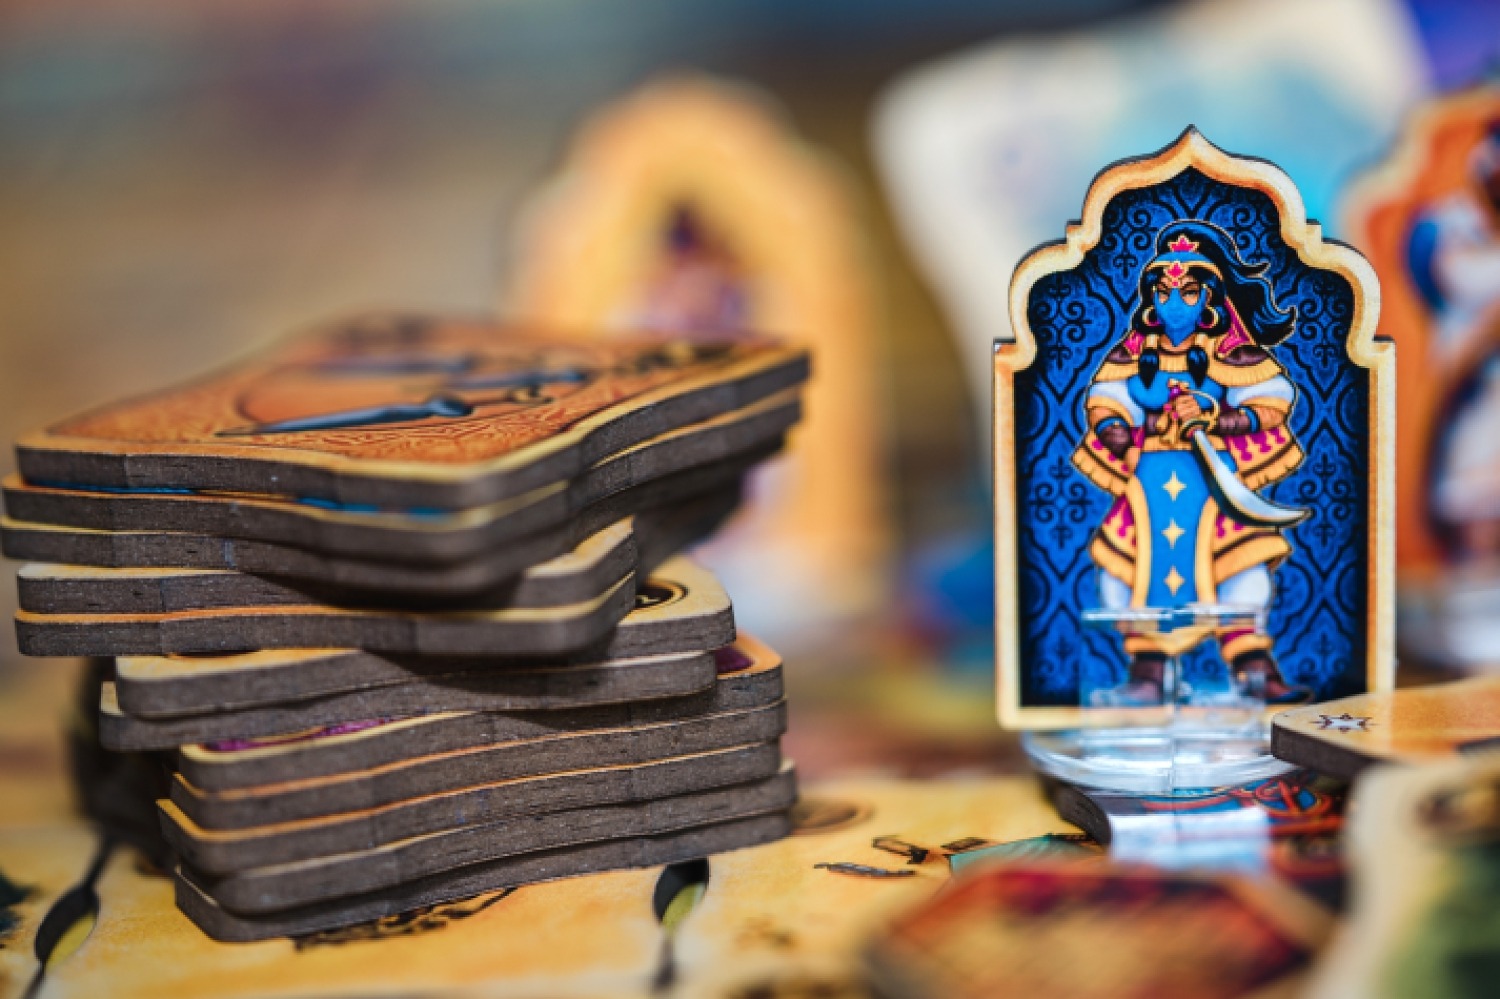 tiles of arabian night Holy Grail Games boardgame jeu de société